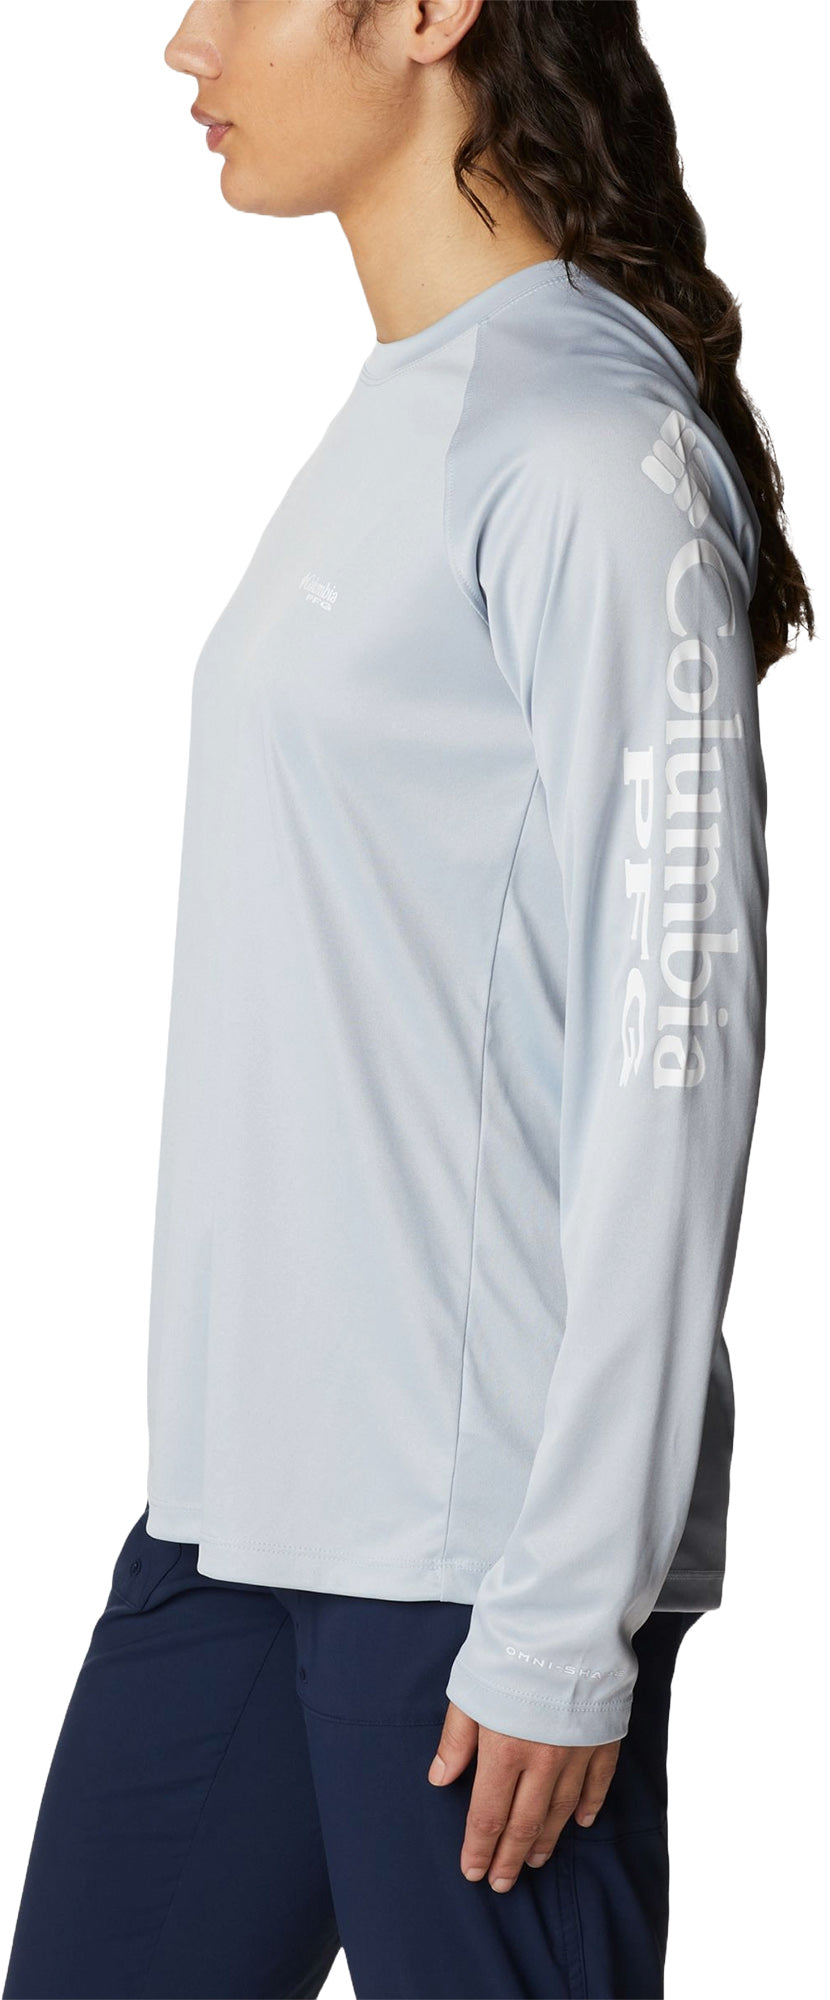 Columbia Women's PFG Tidal Tee Heather Long Sleeve Shirt - XL 